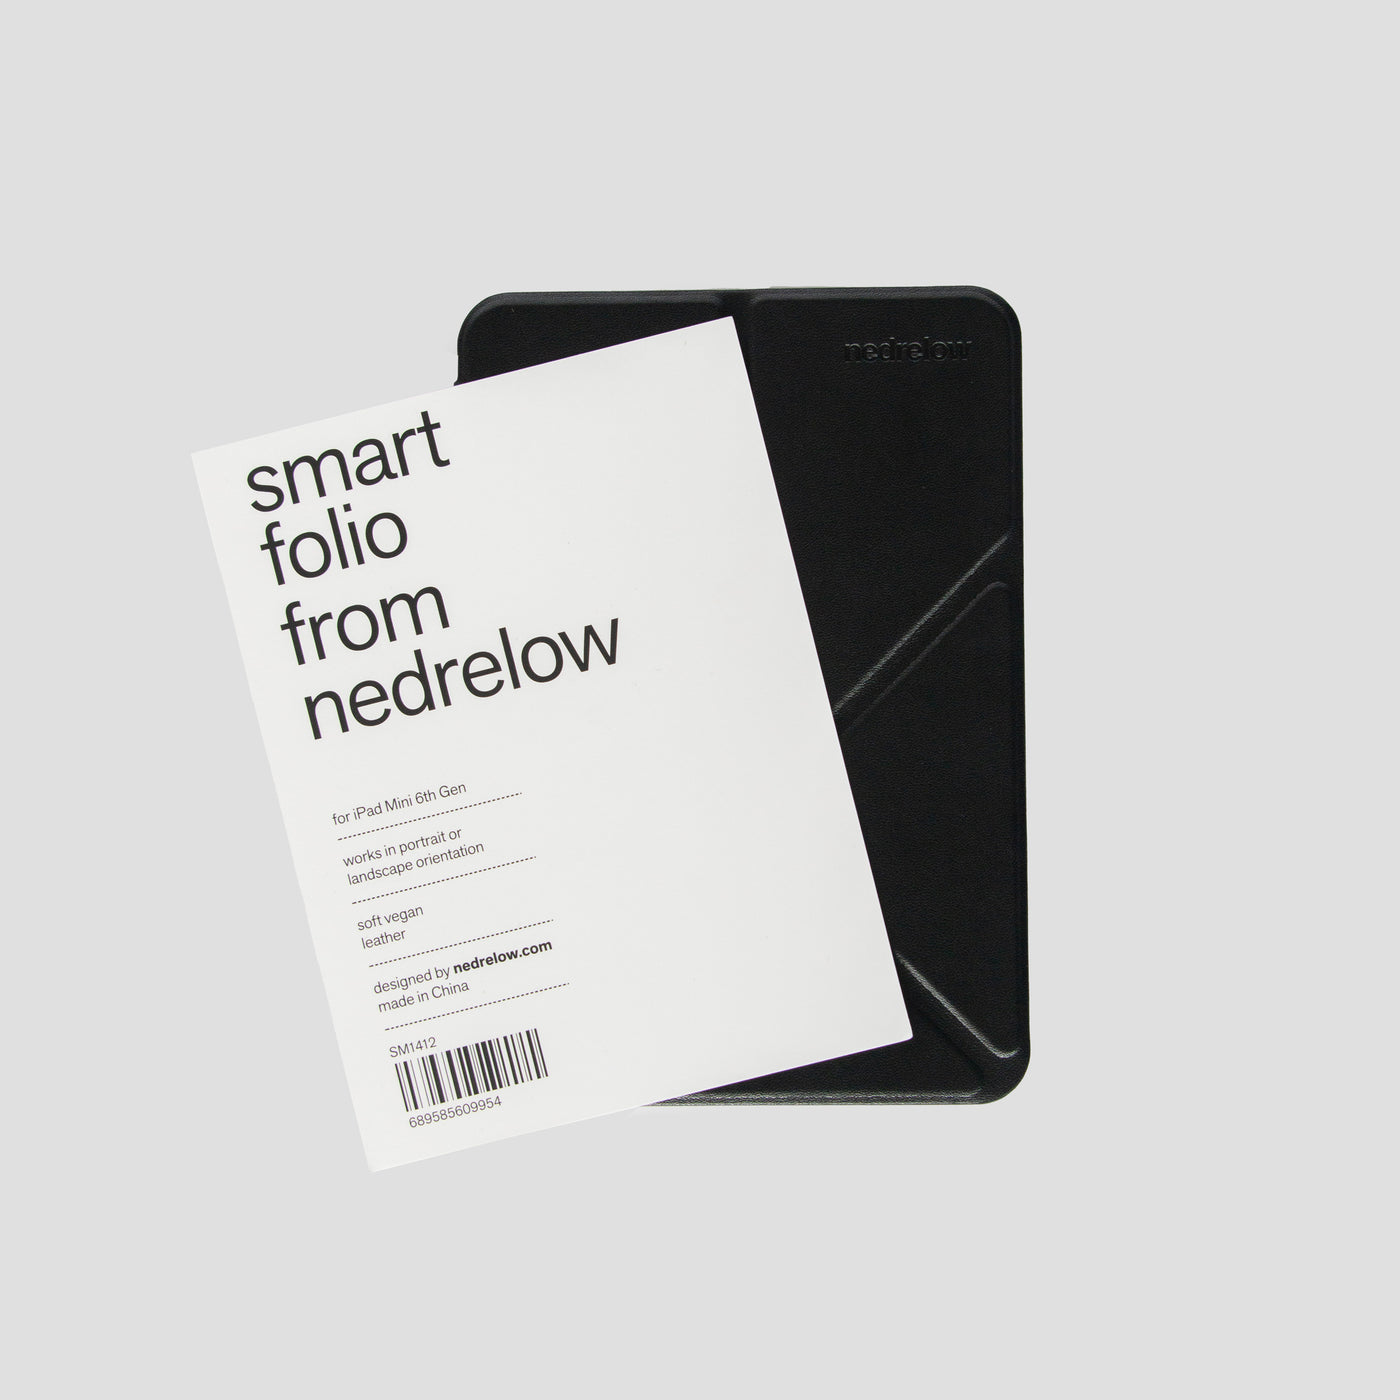 smart folio case for iPad (works in portrait or landscape)